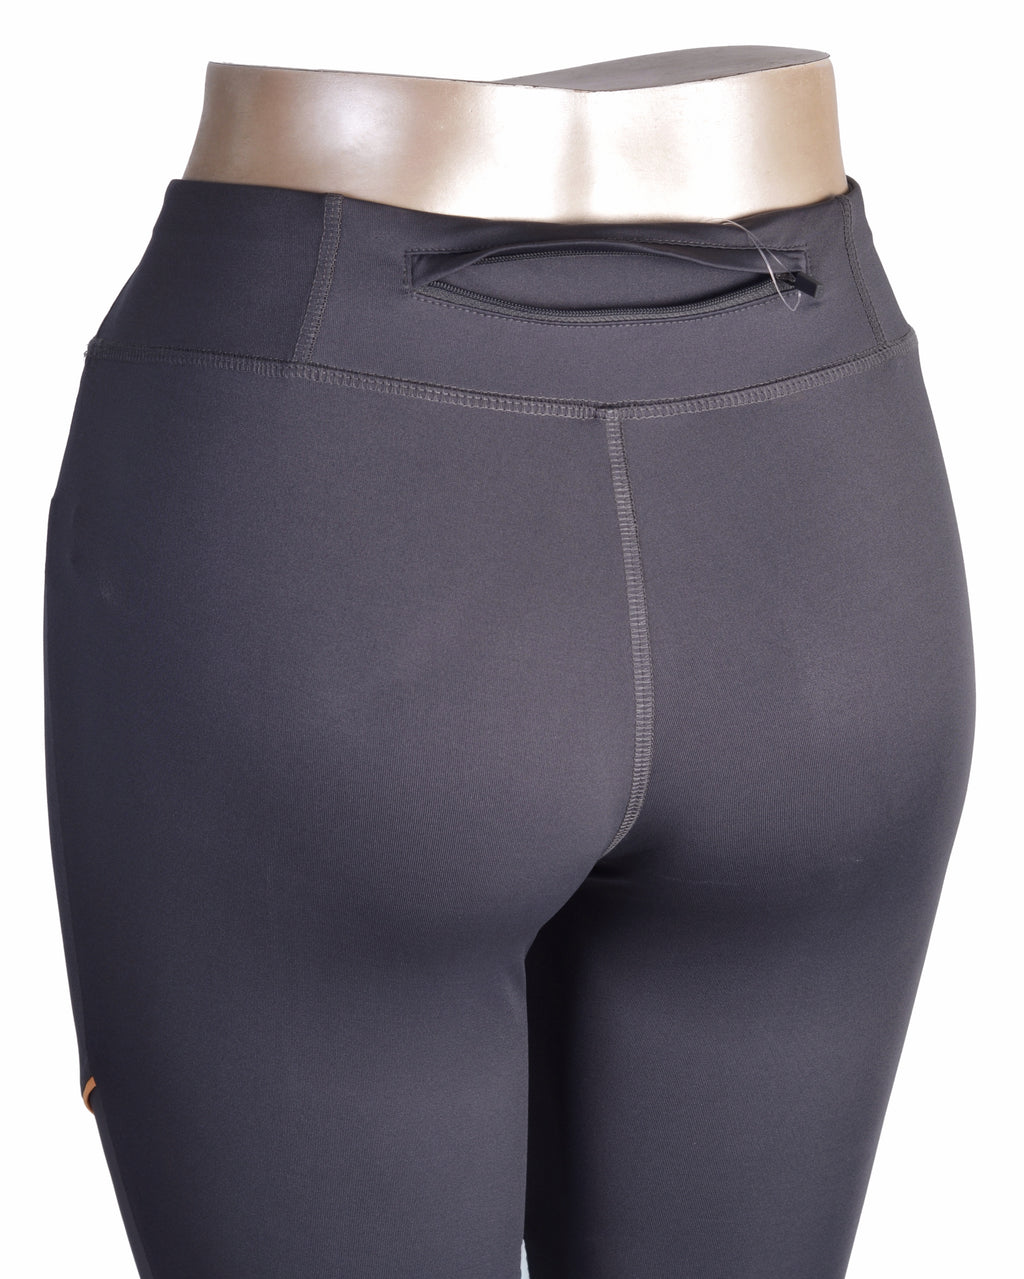 Newcential Women Shorts Capri Tights-Deep Grey and light blue